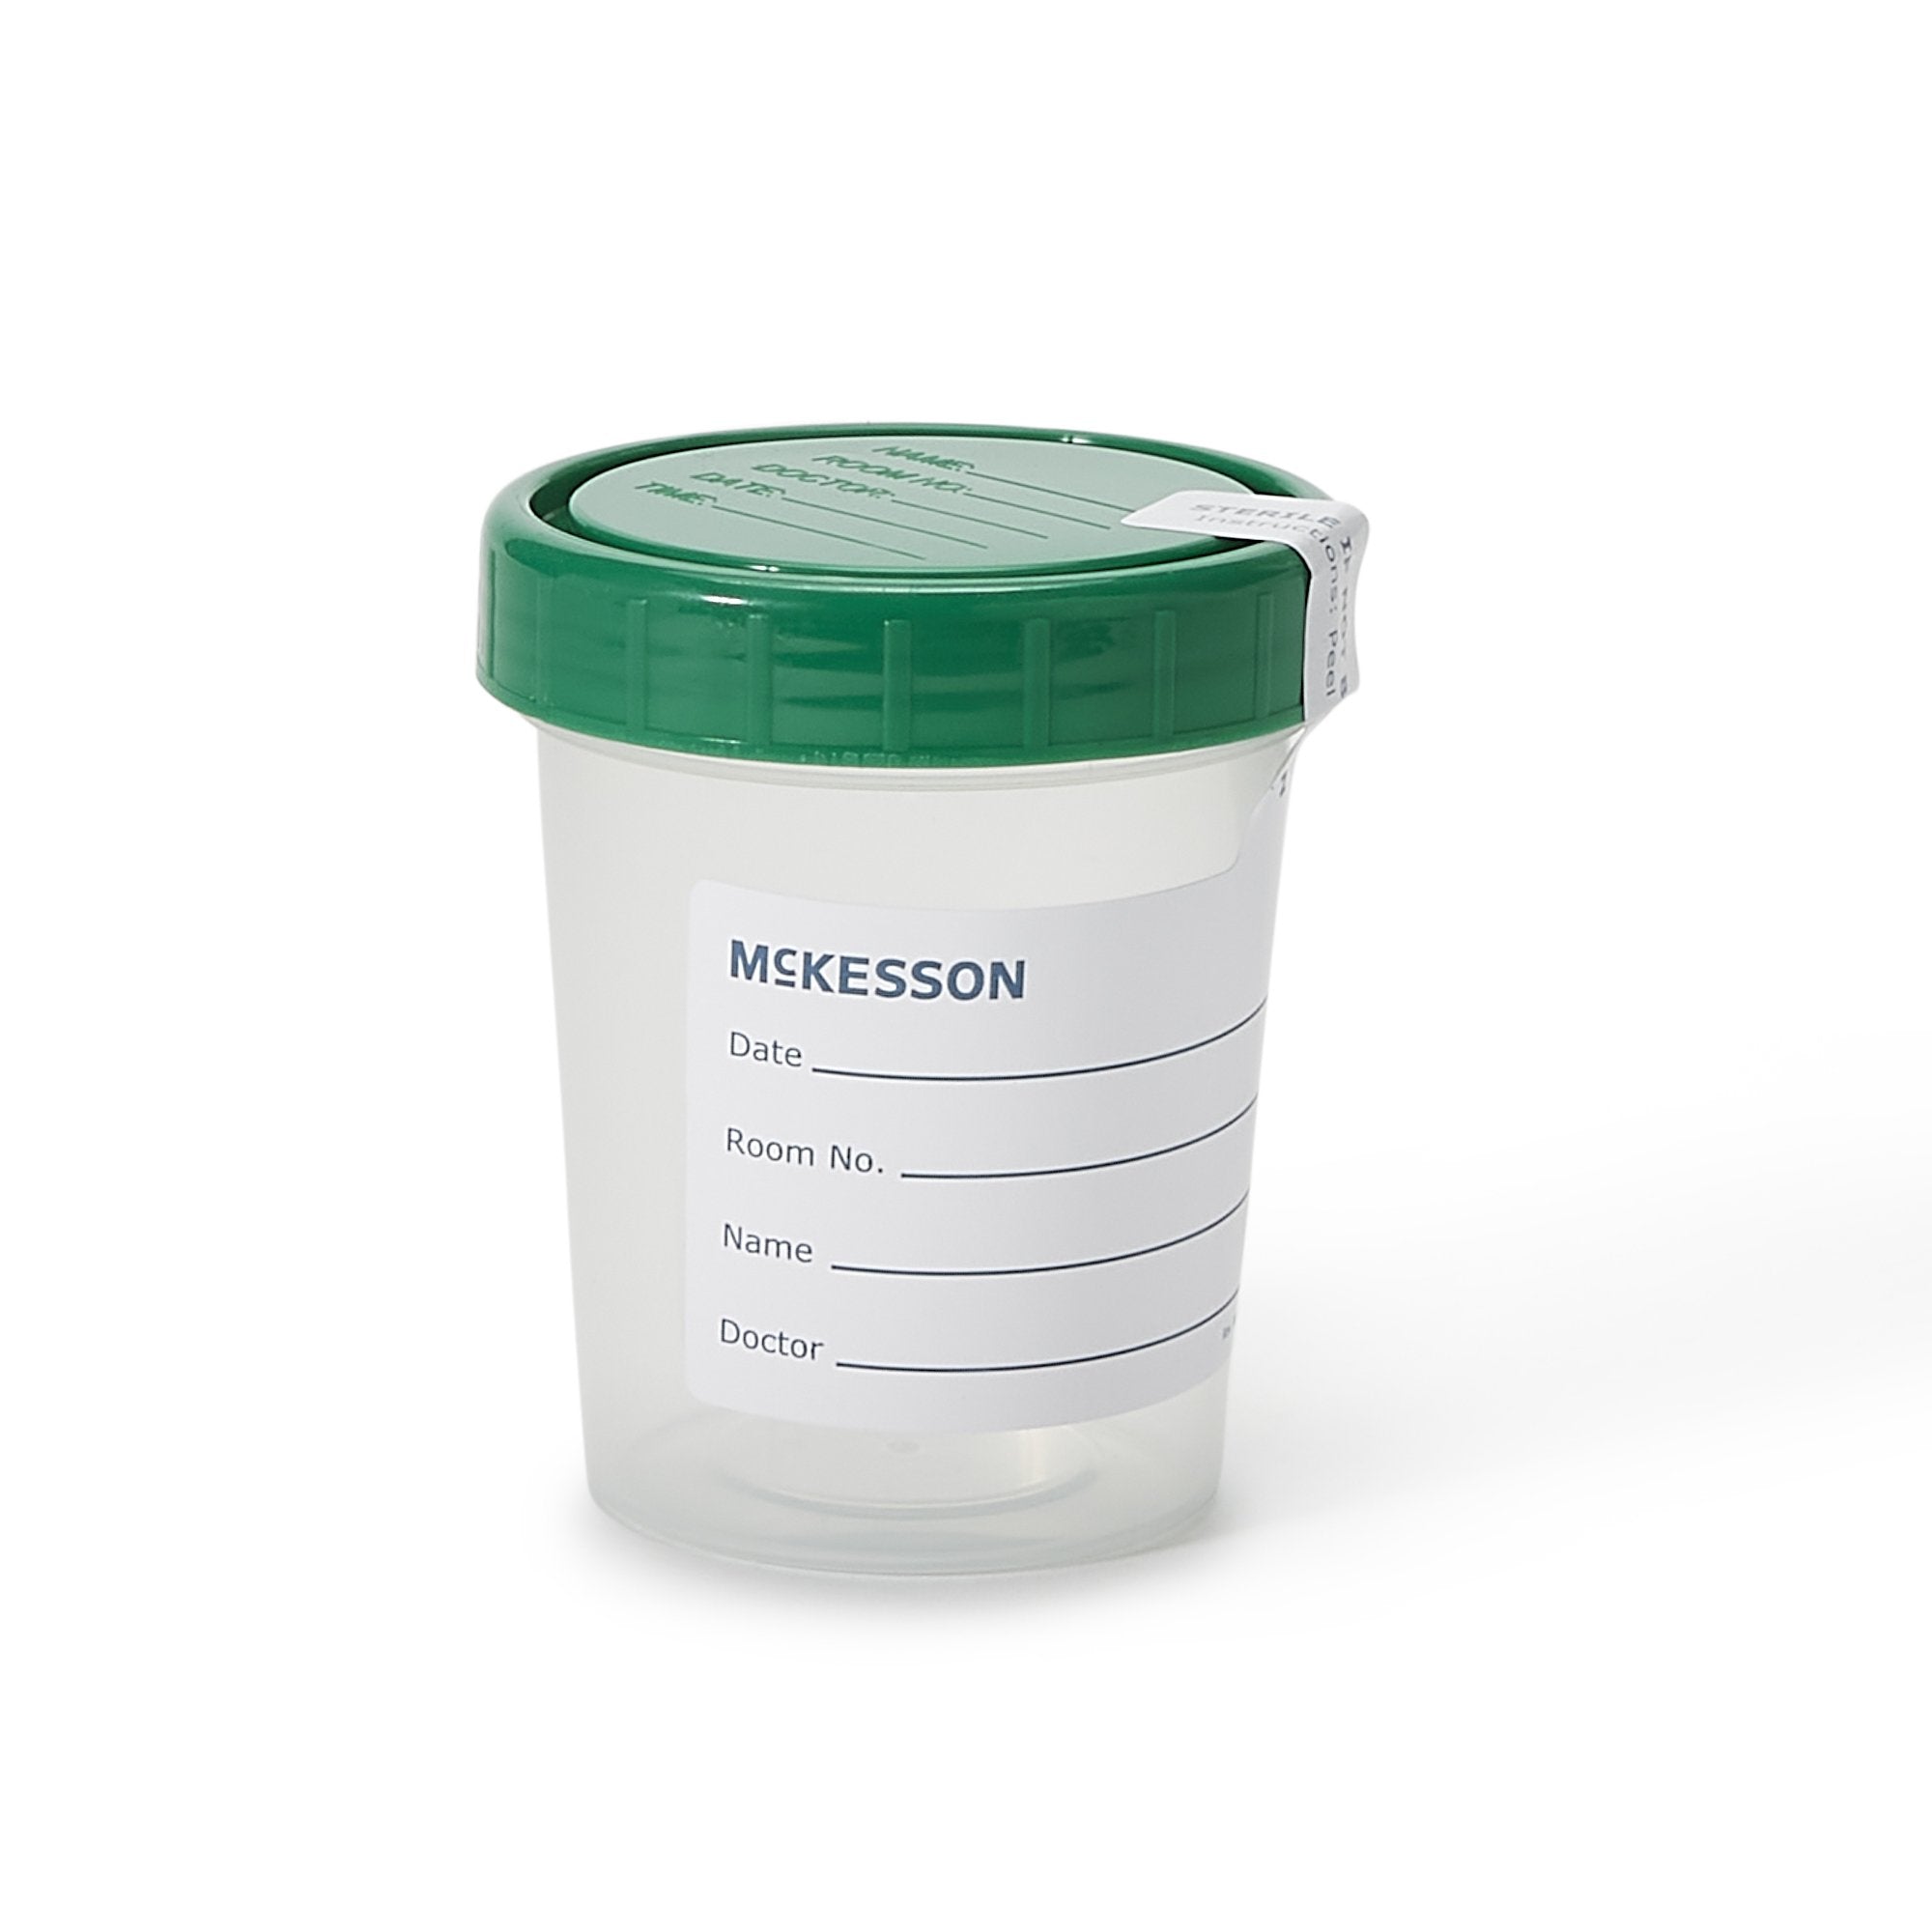 McKesson Specimen Container, 120 mL, McKesson Brand 569, 1 Count